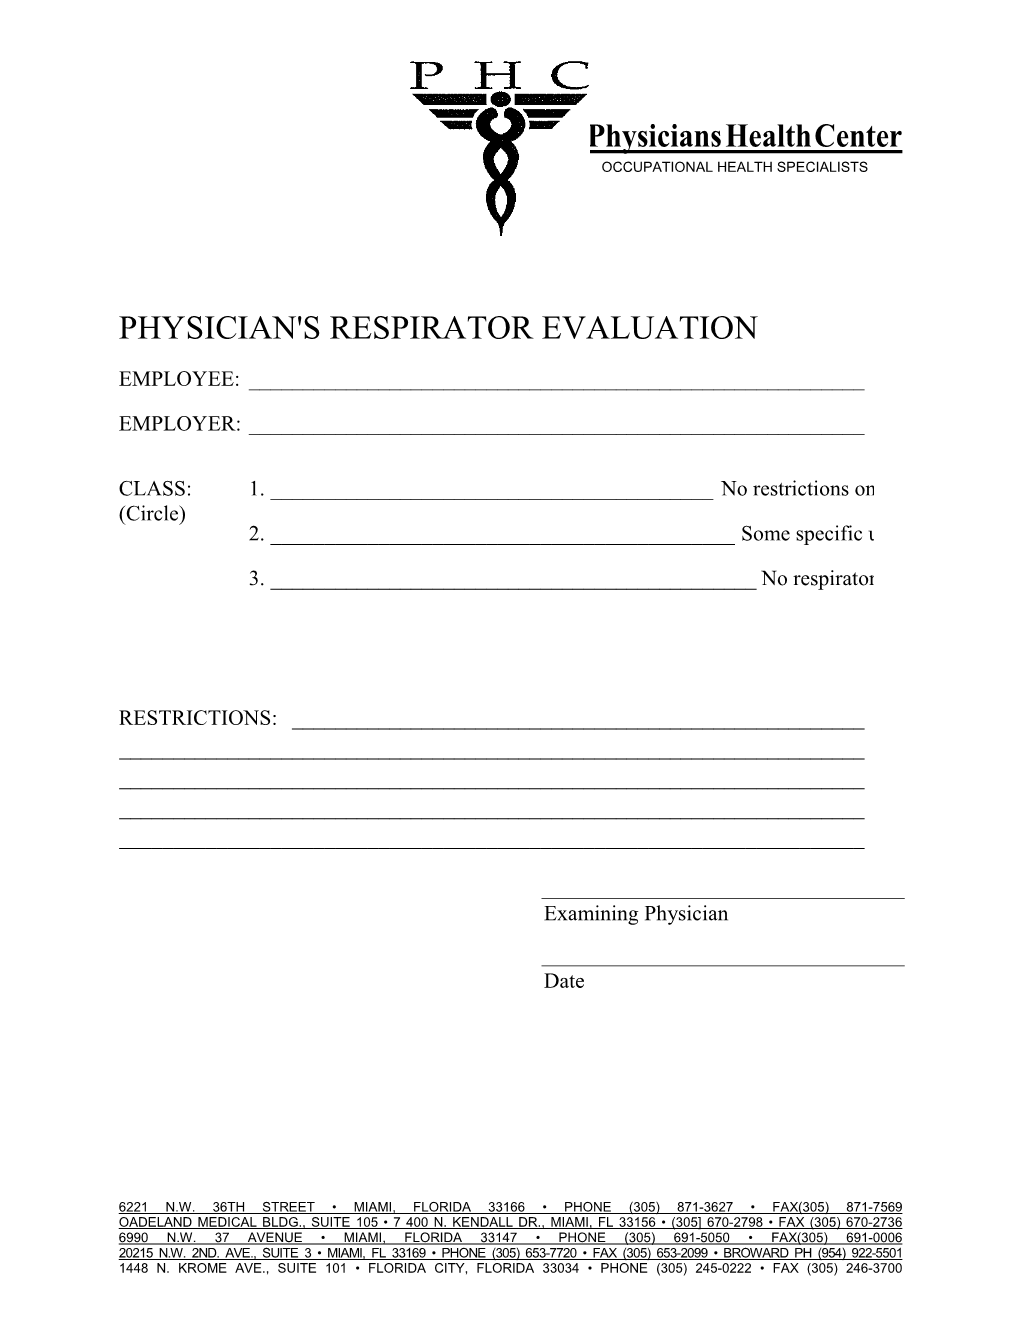 Physician's Respirator Evaluation